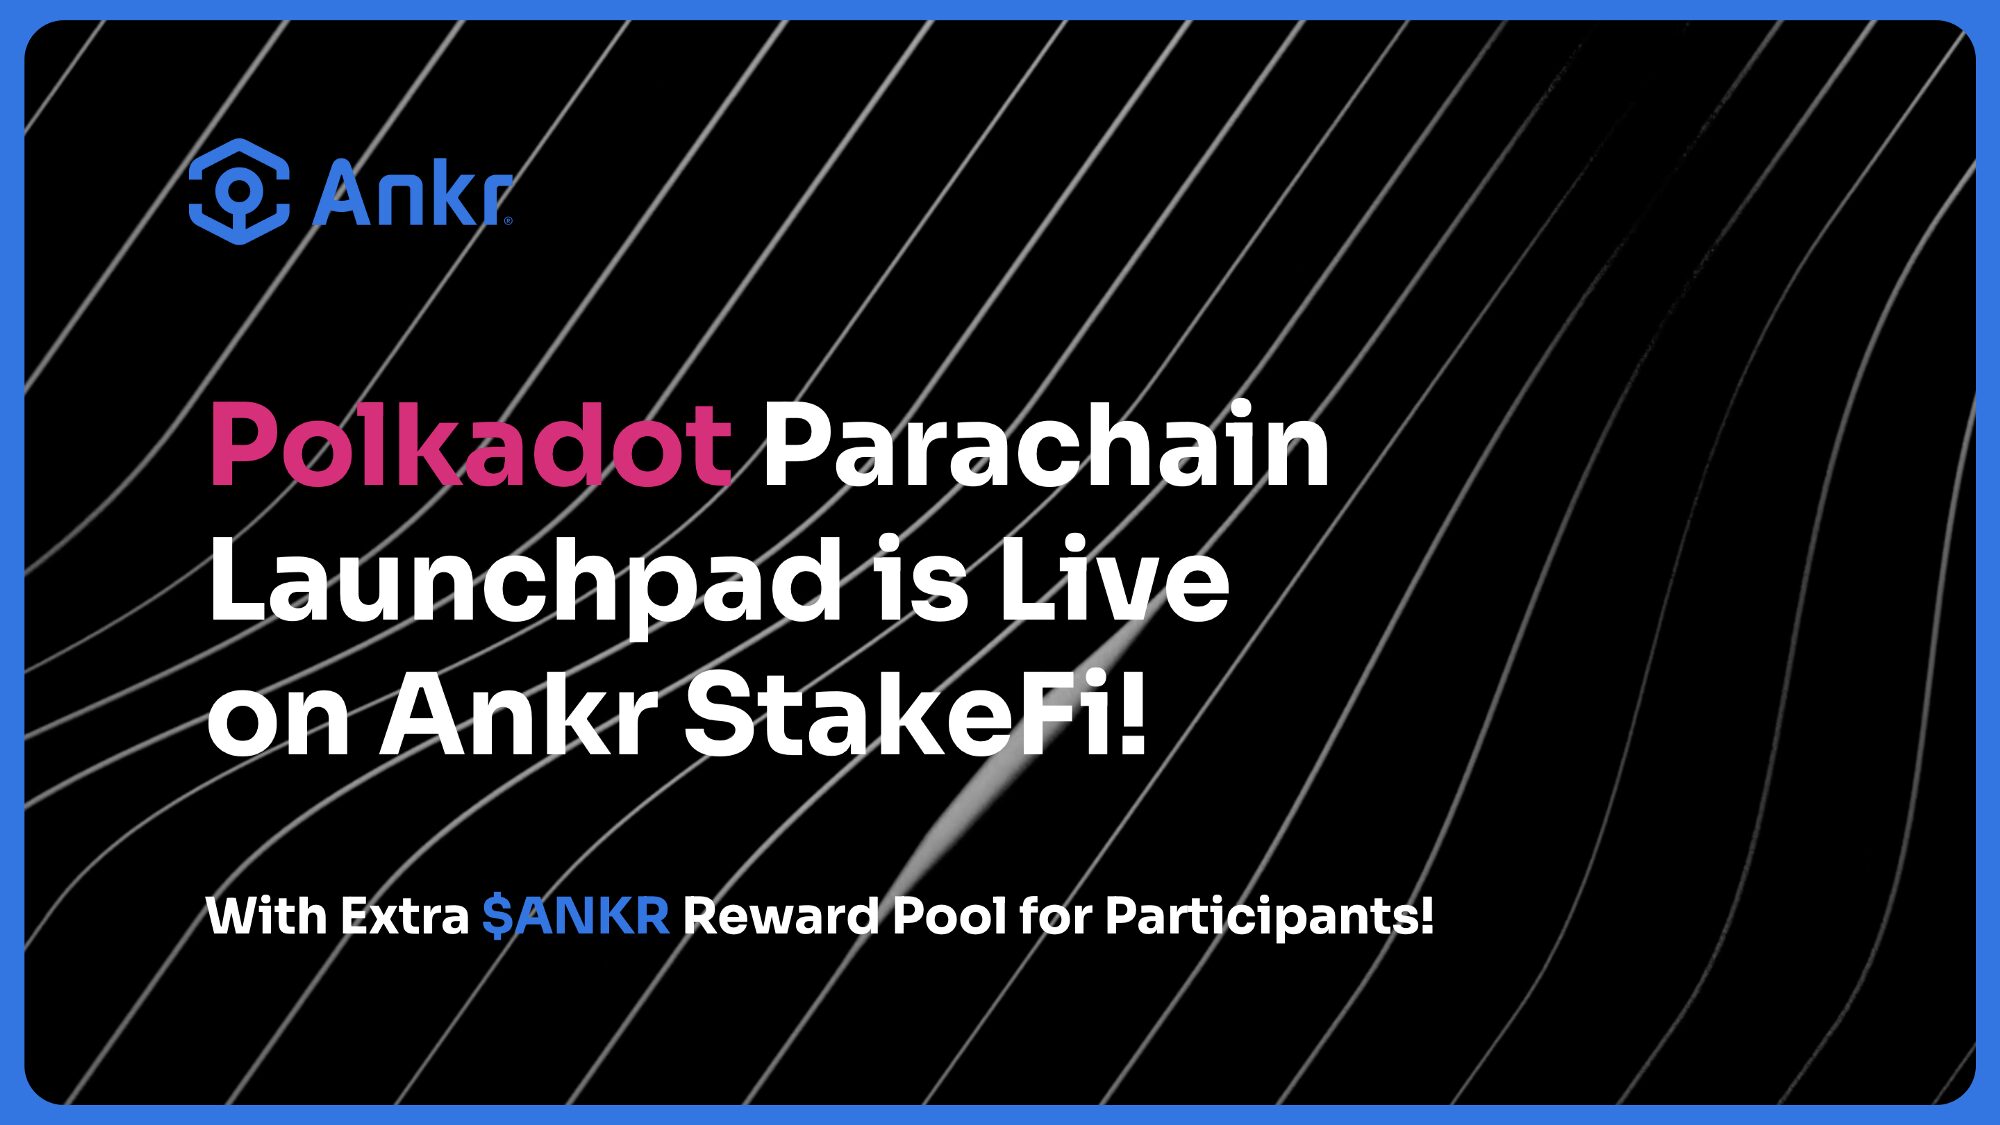 Polkadot Parachain Launchpad is Live on Ankr StakeFi